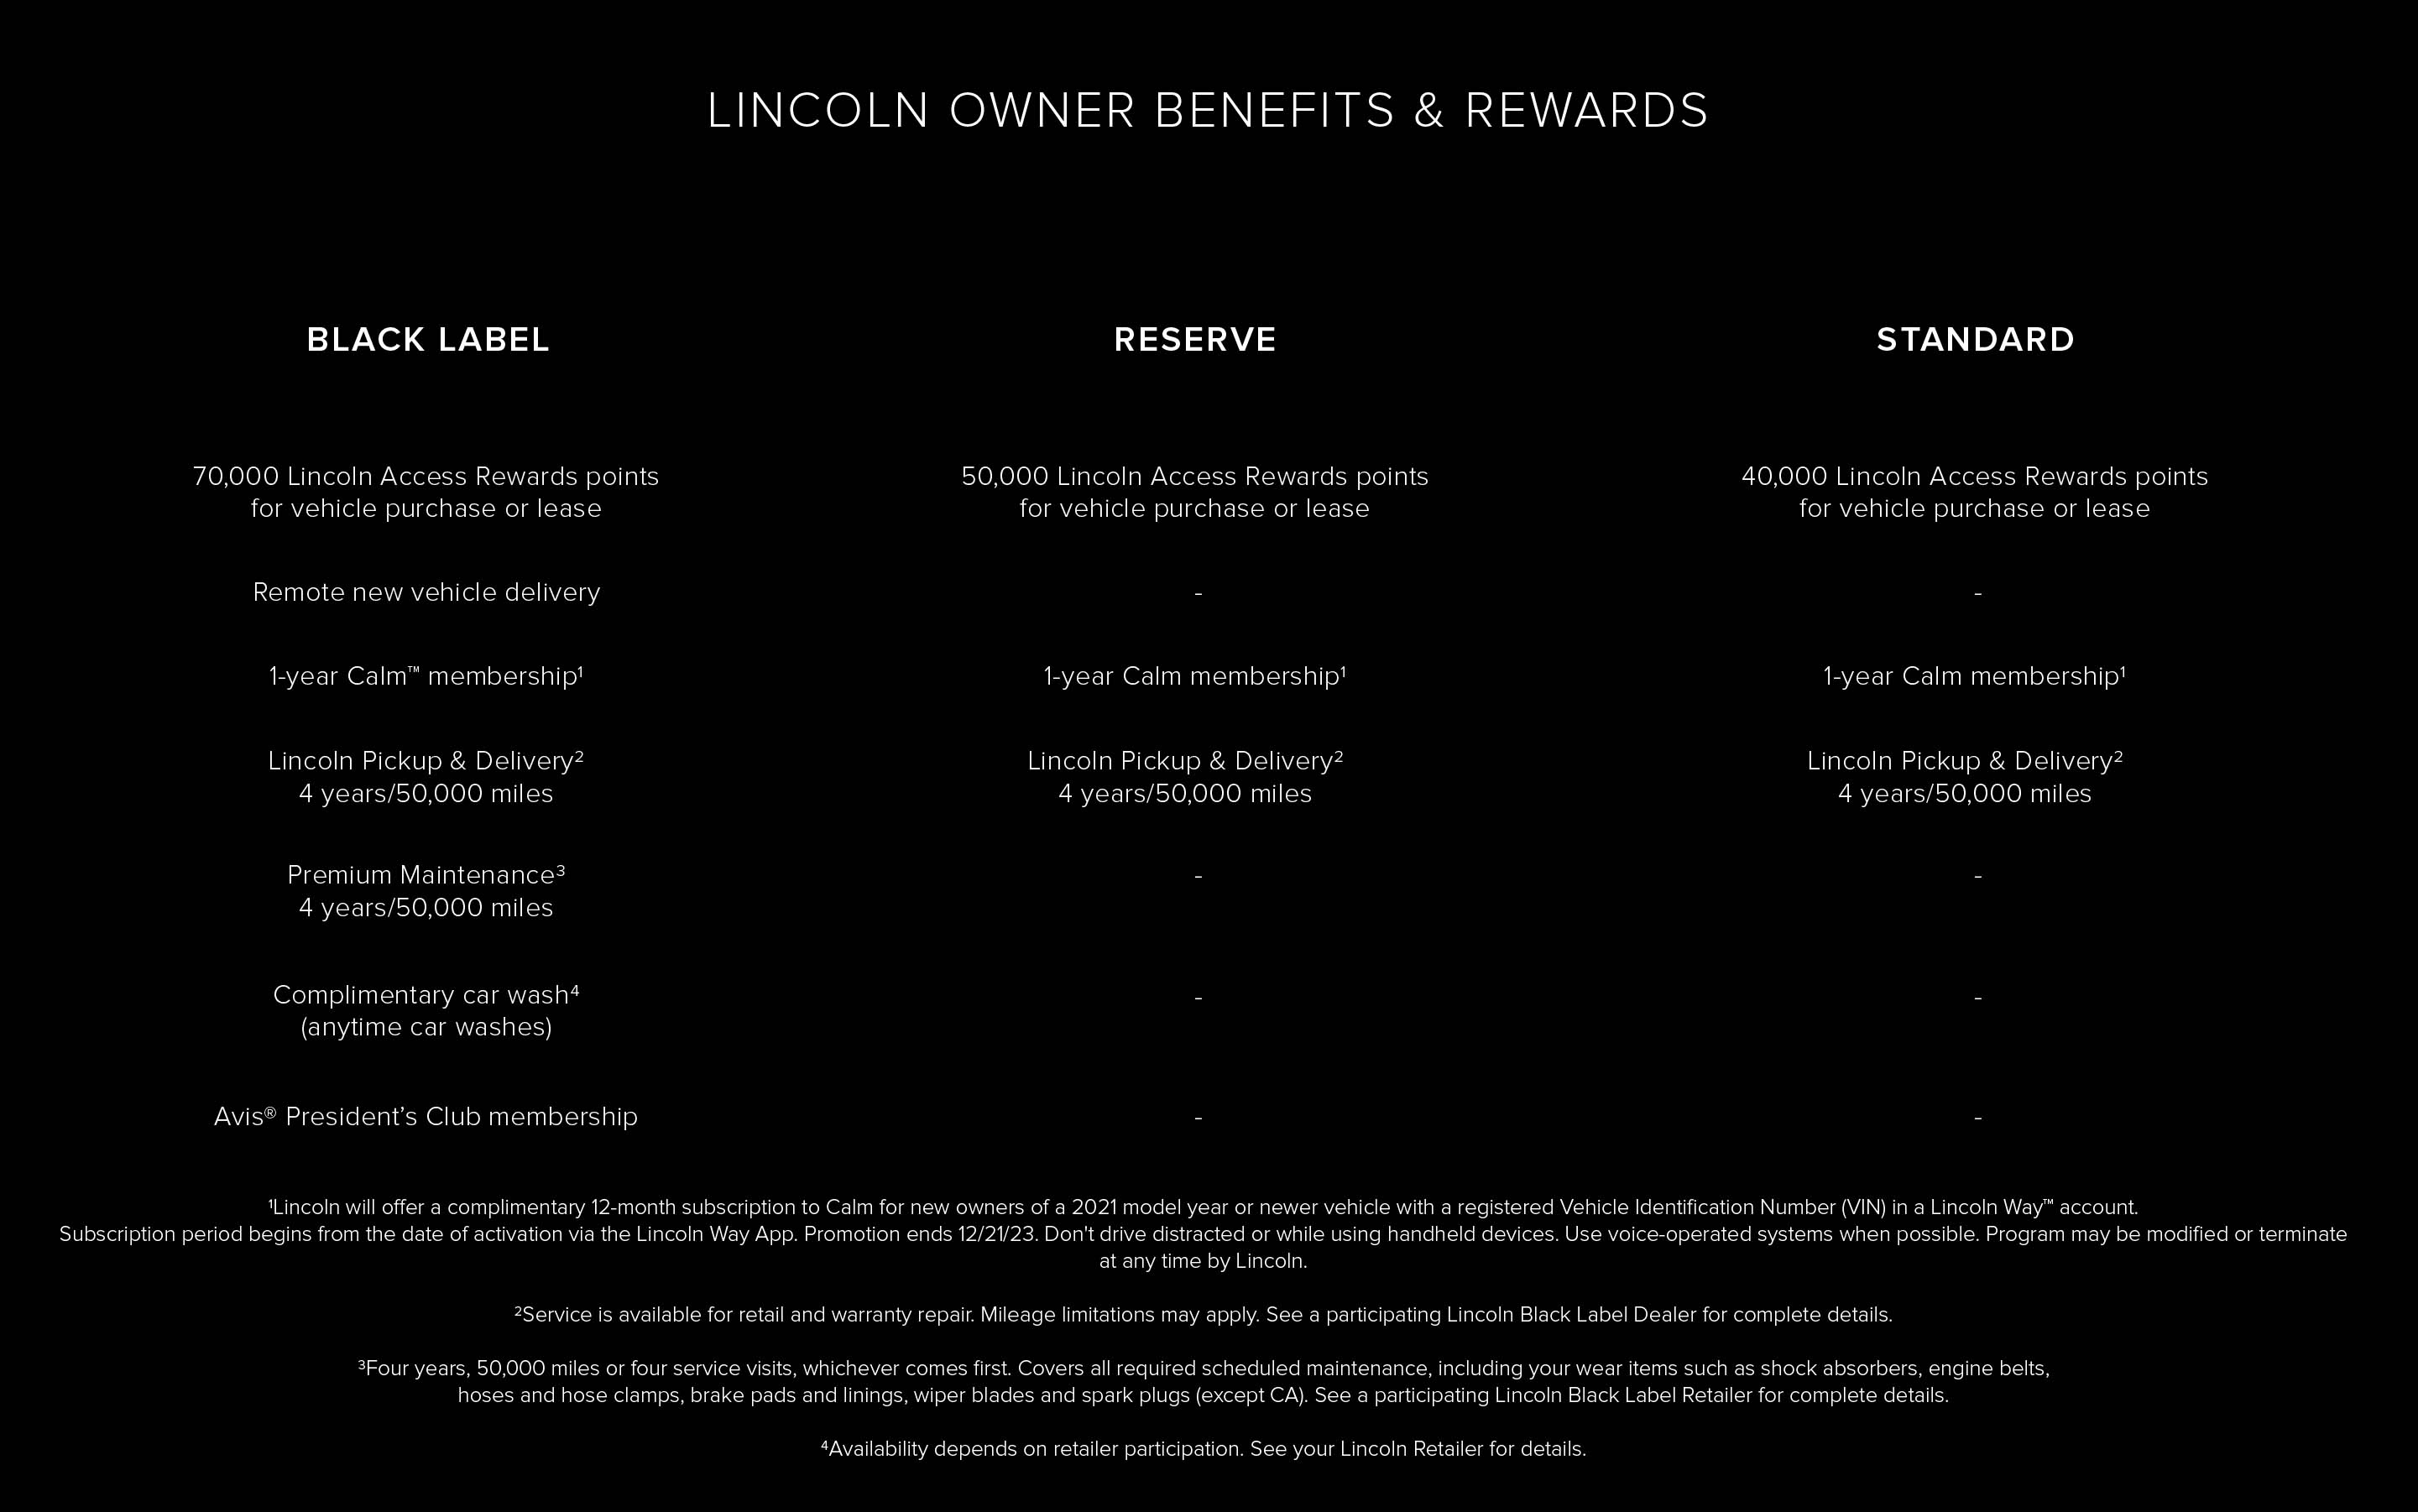 Lincoln Black Label owner benefits comparison chart